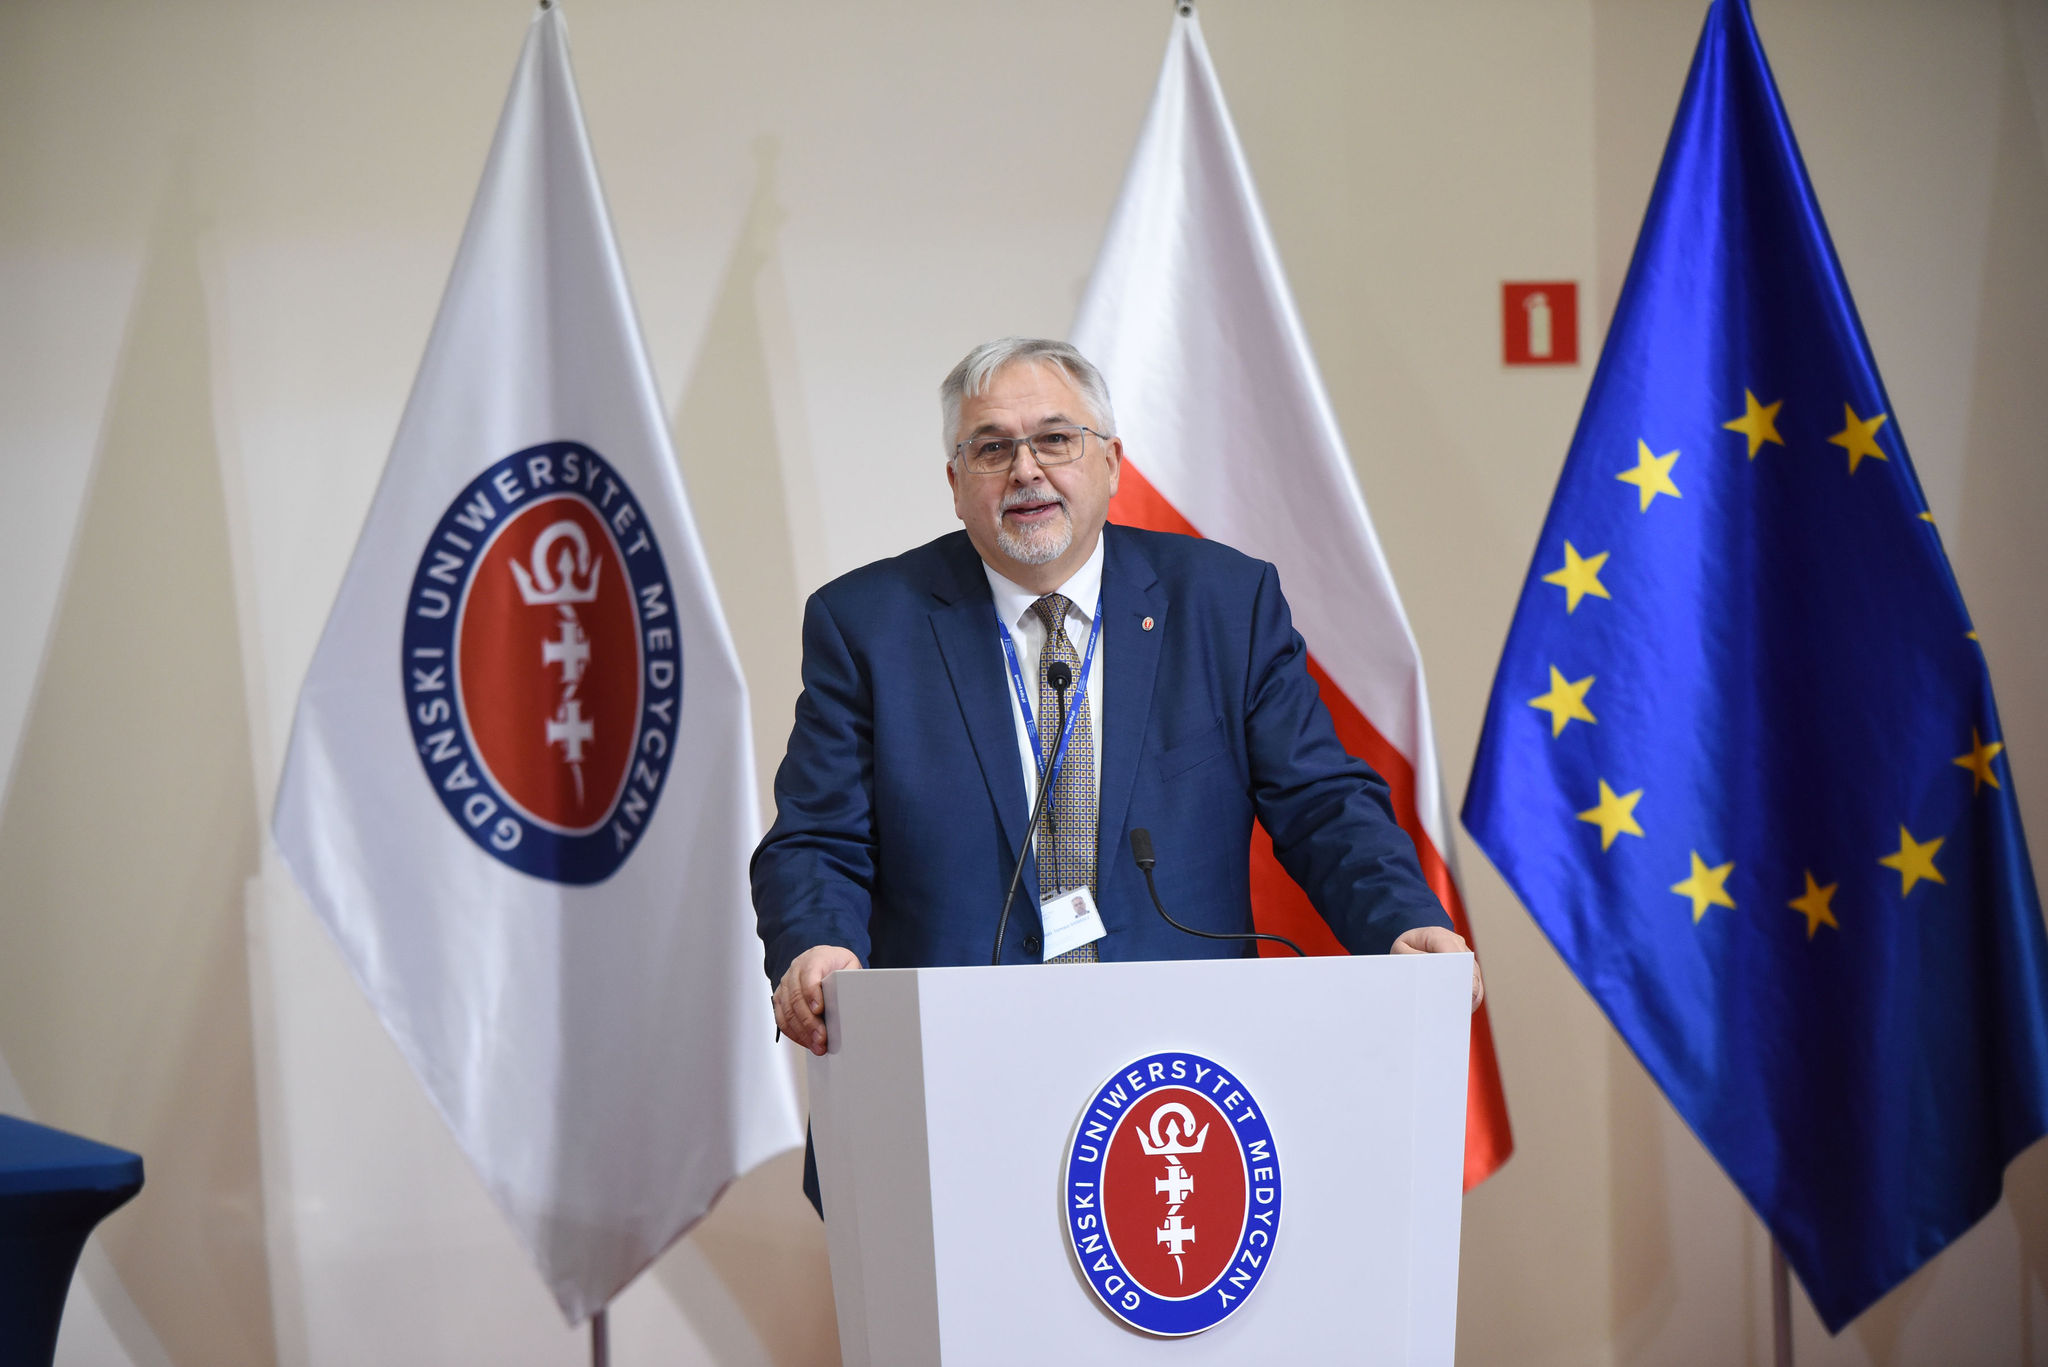 prof. Tomasz Smiatacz during his speech